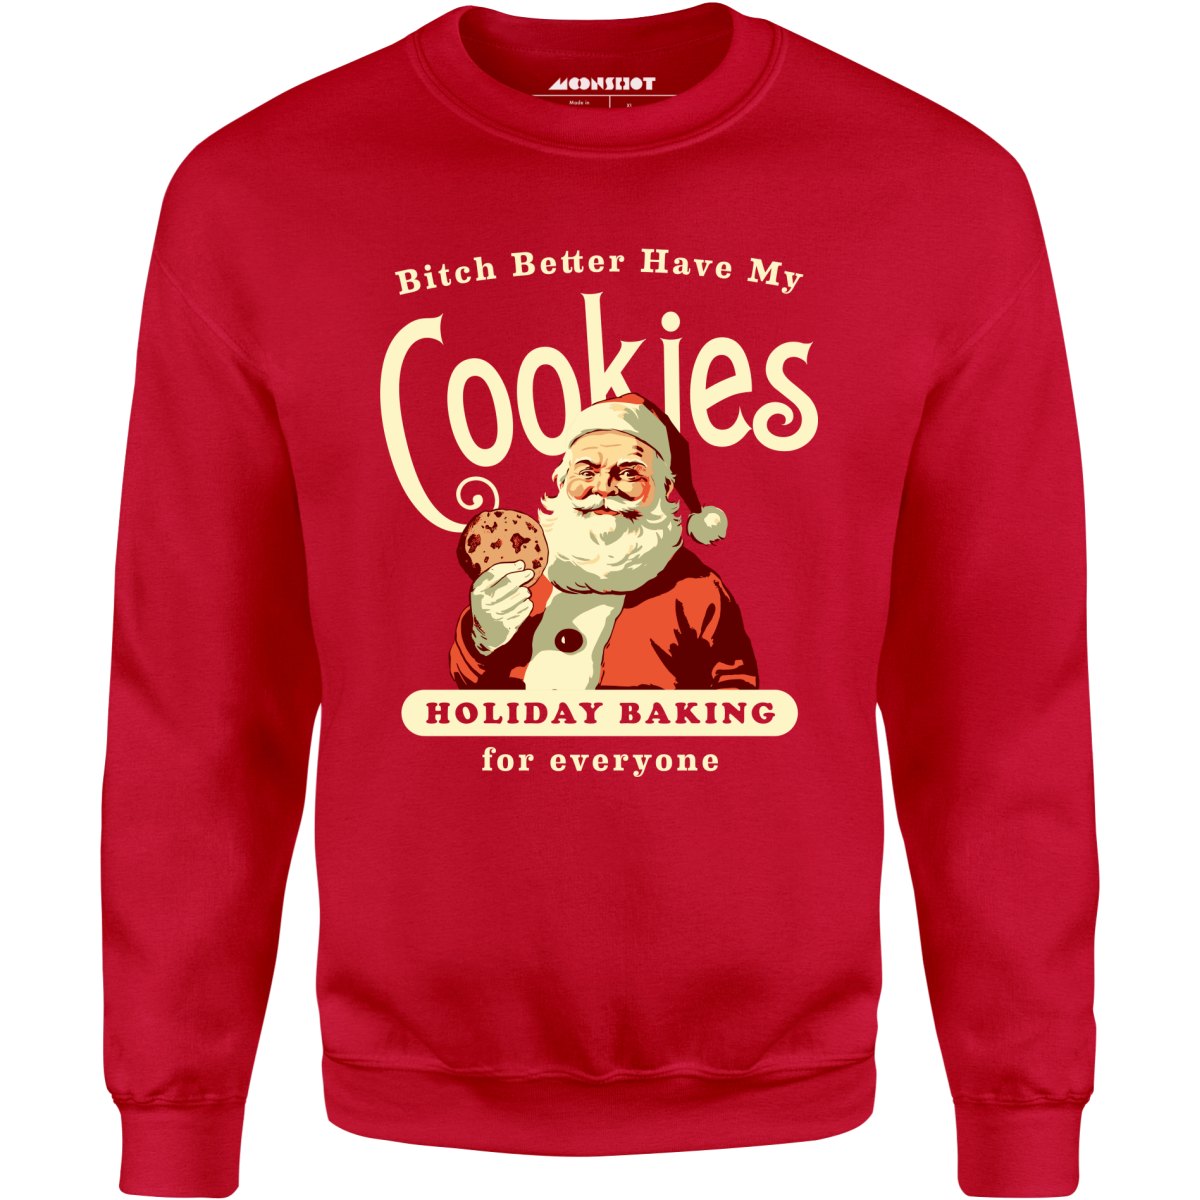 Bitch Better Have My Cookies Holiday Baking - Unisex Sweatshirt